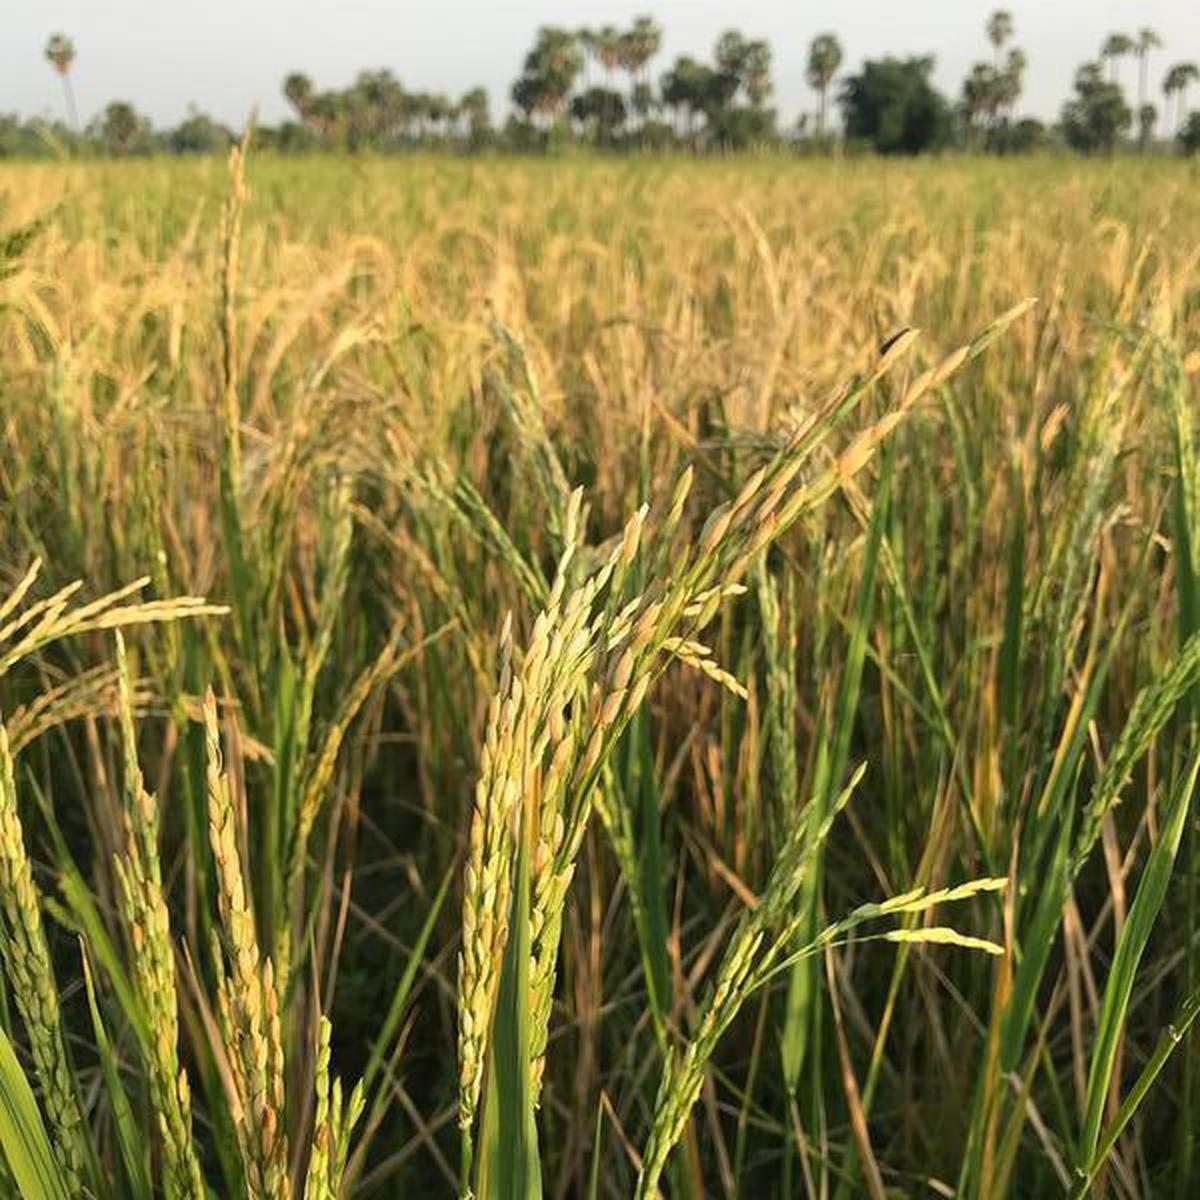 Prithvi Farms cultivates five heirloom rice varieties